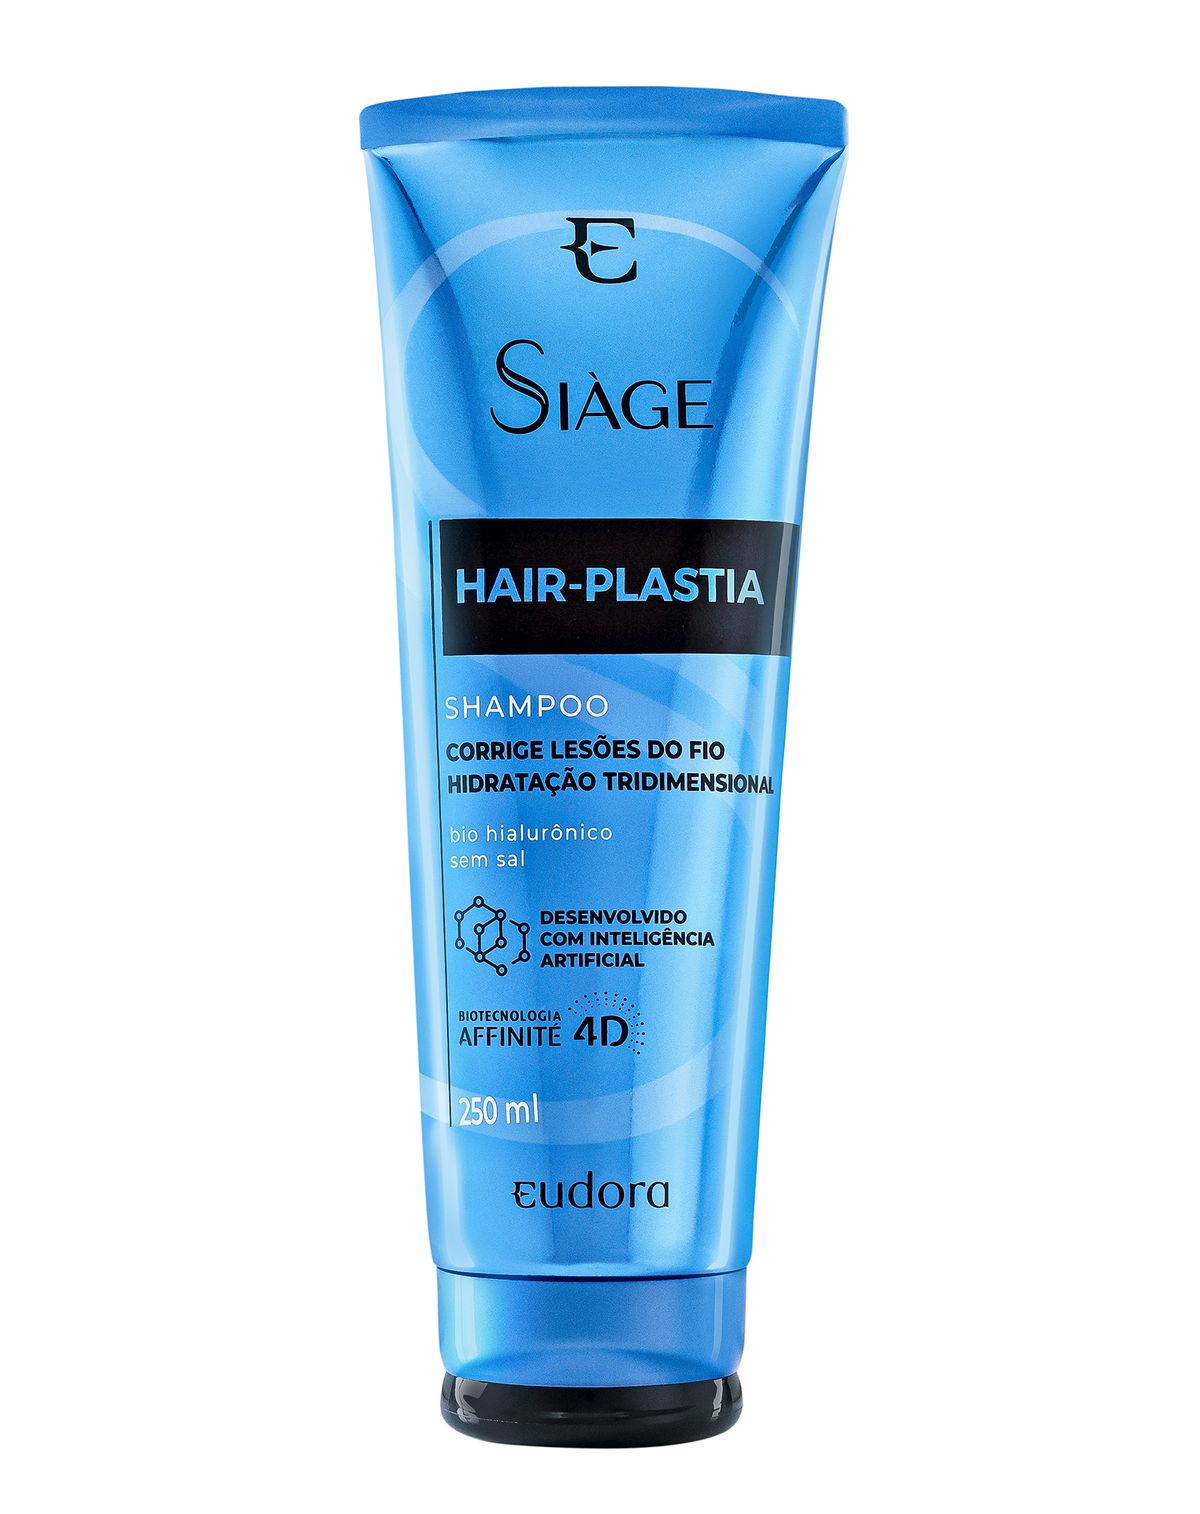 616966001-shampoo-siage-hair-plastia-eldora-250ml-unica-u-8f4